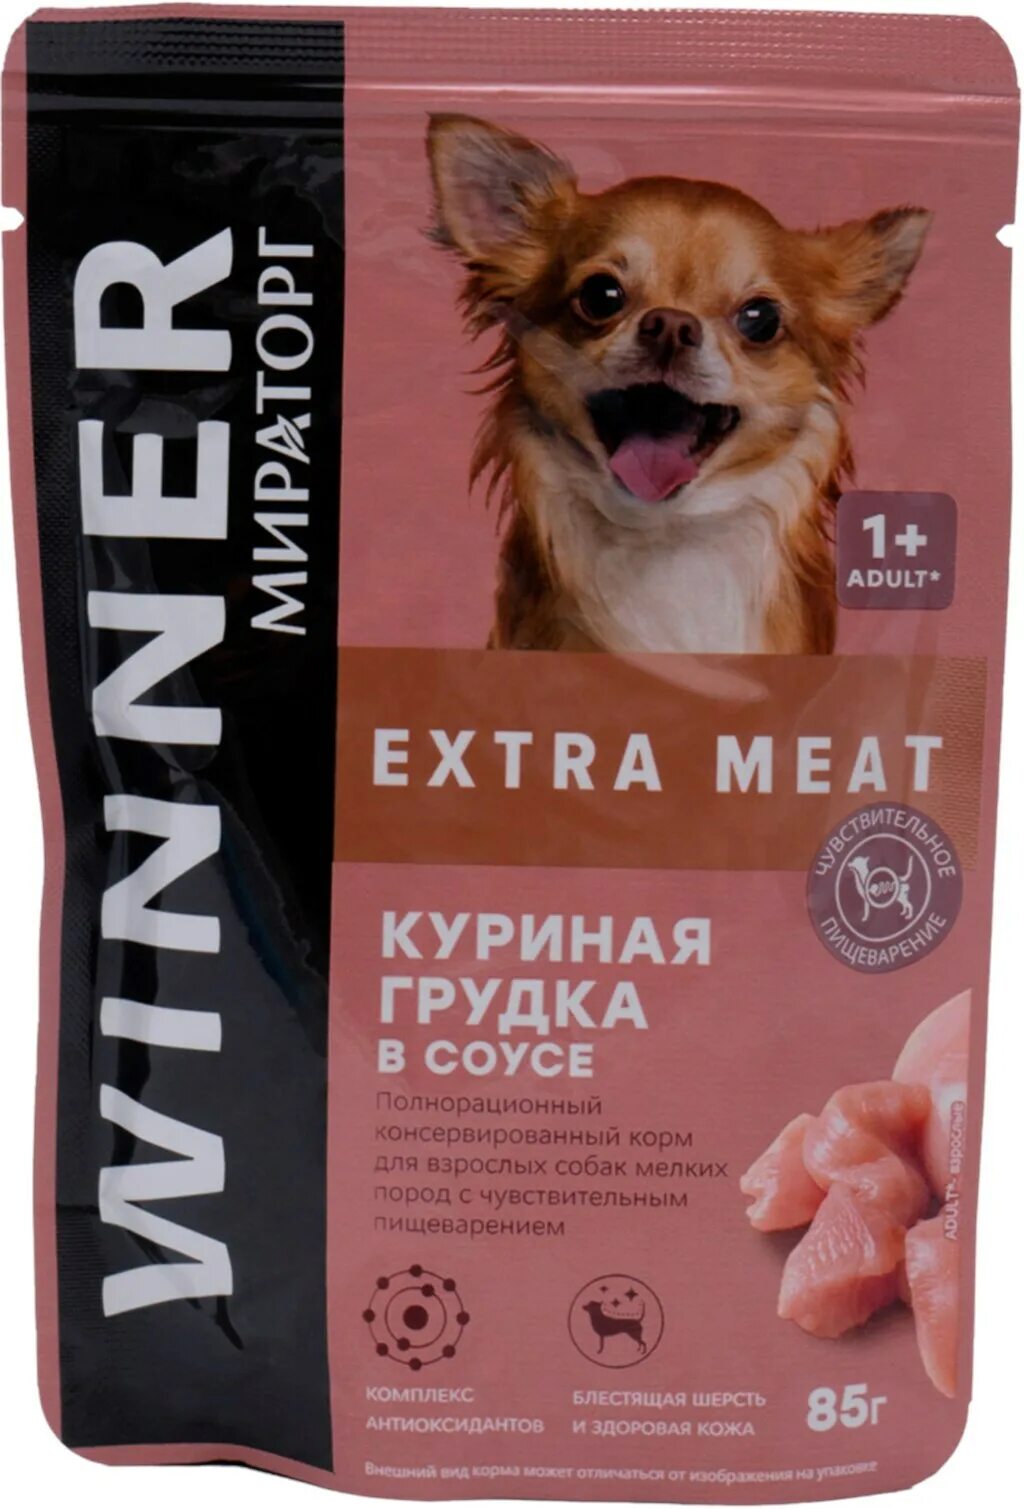 Корм для собак winner Extra meat. Корм Винер Экстра мит. Winner Extra meat корм для кошек в соусе. Корм winner Extra meat для взрослых соба.